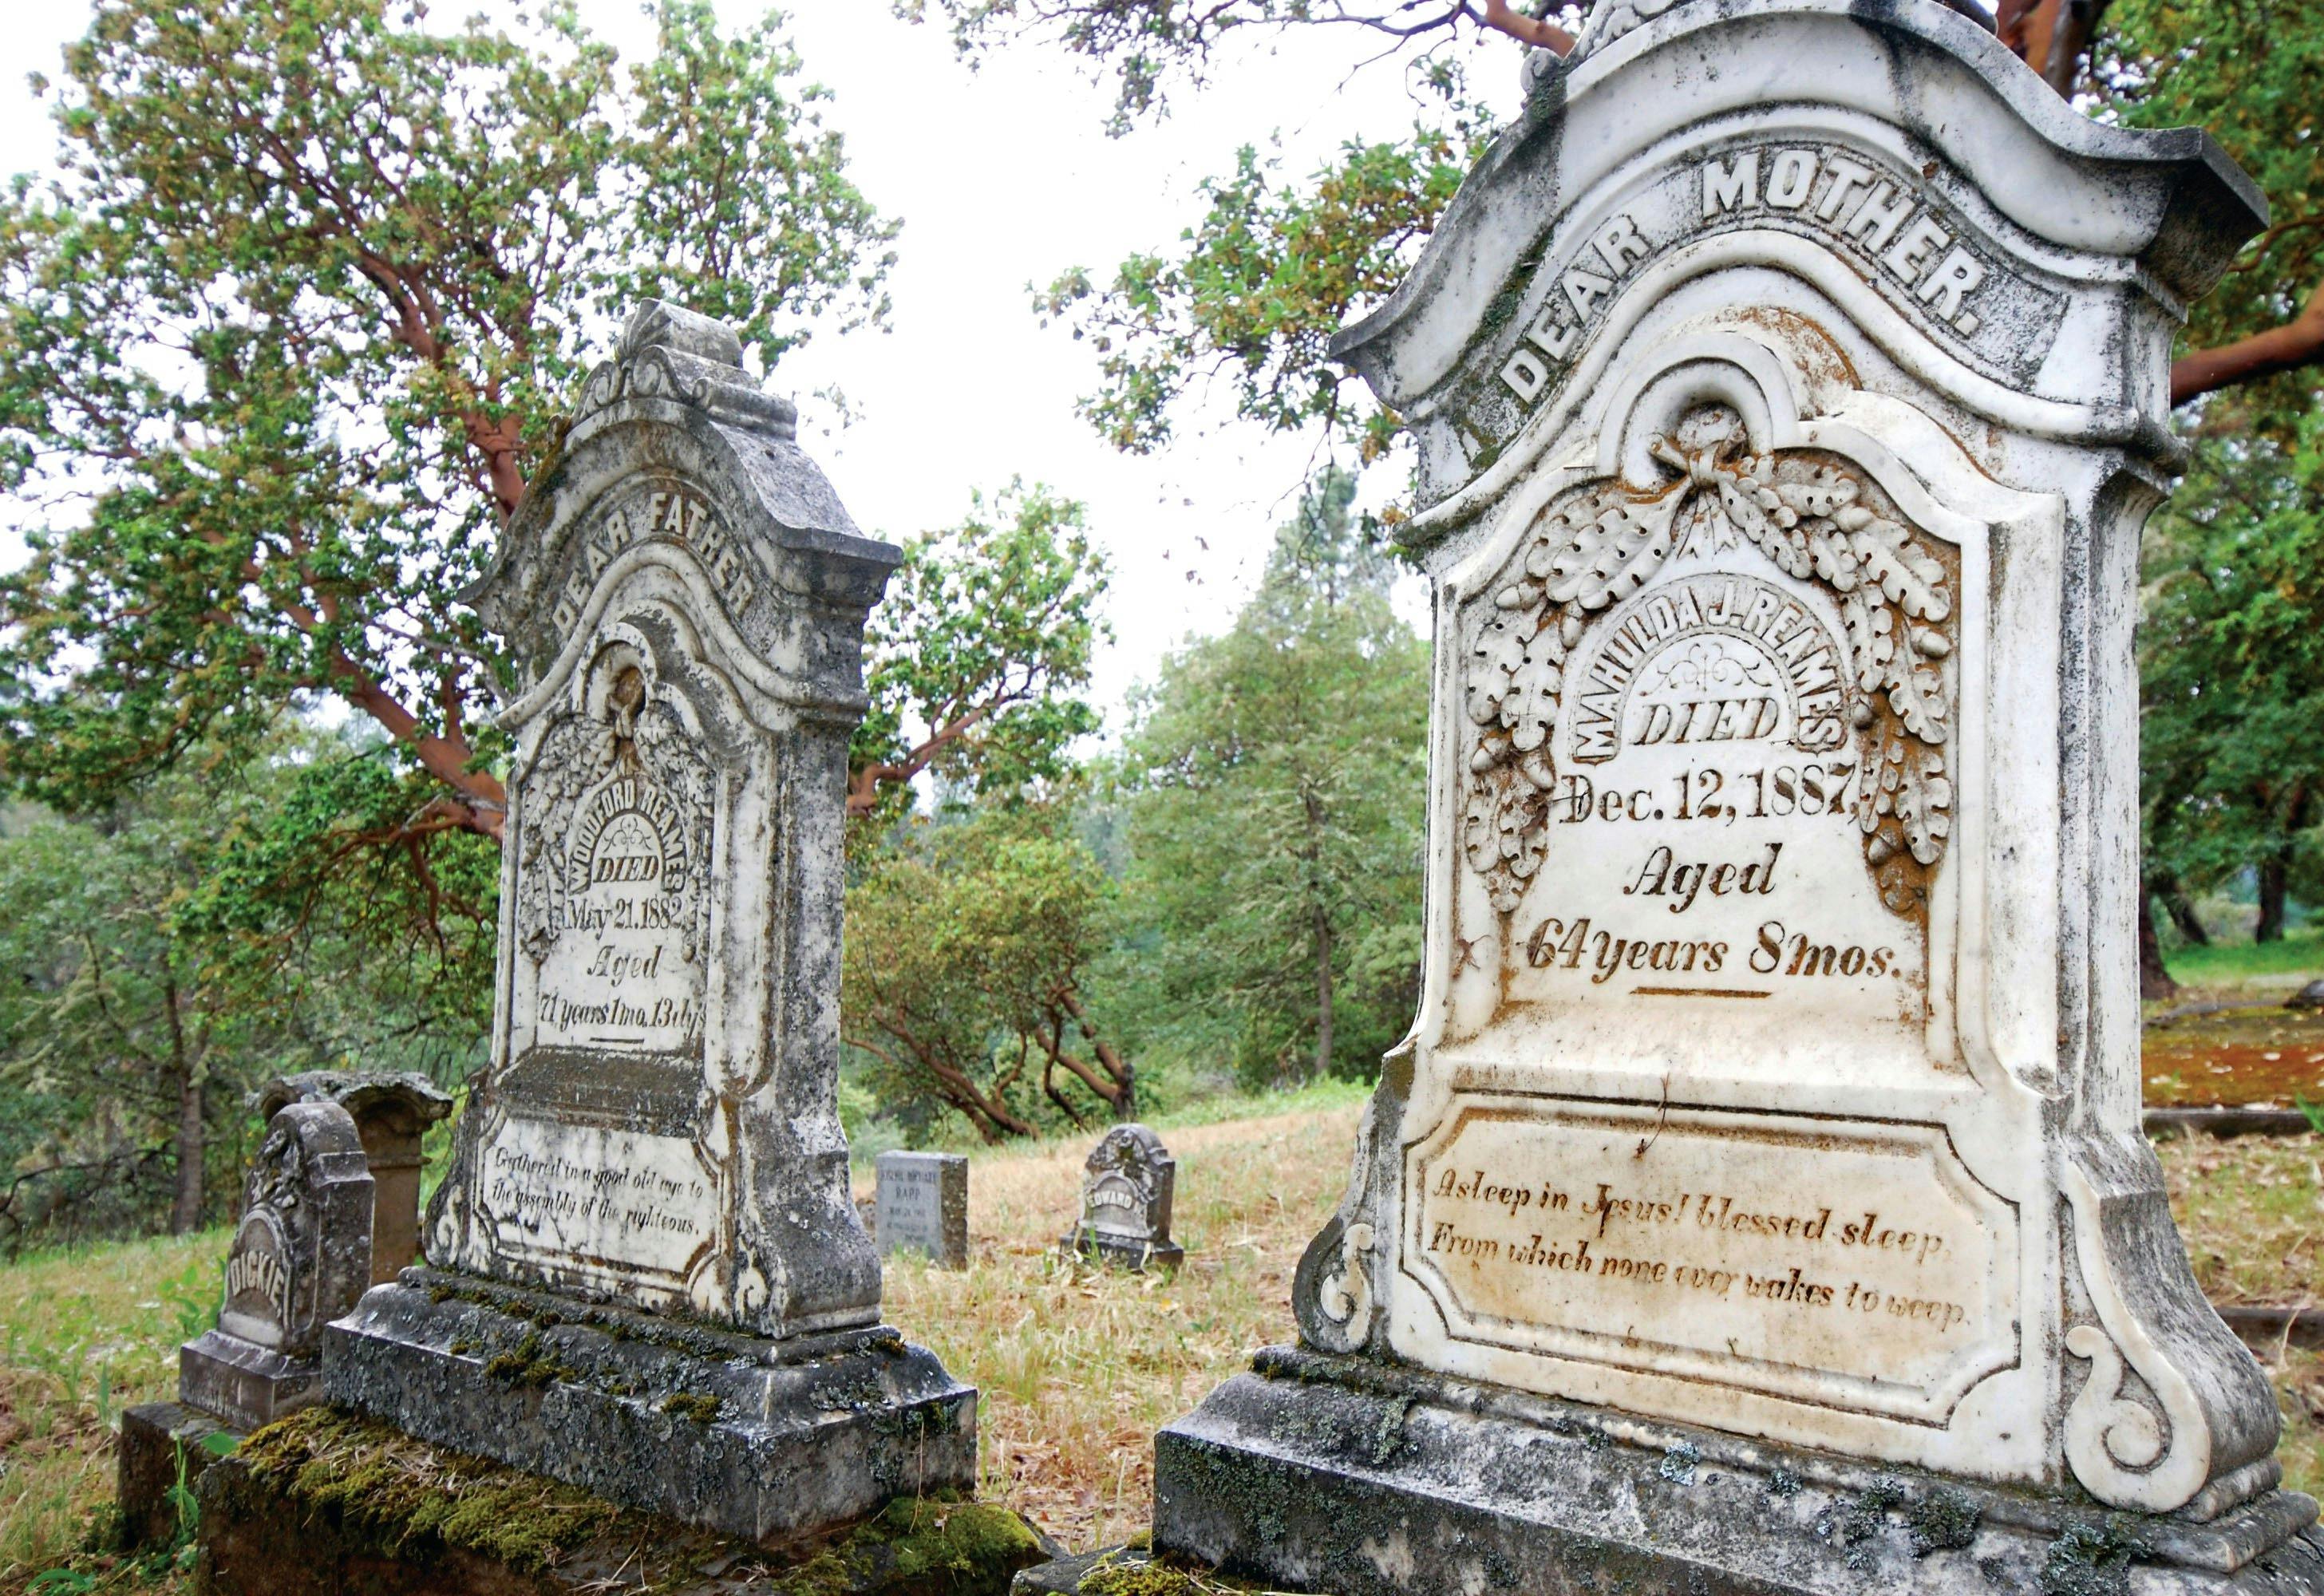 The Historic Jacksonville Cemetery